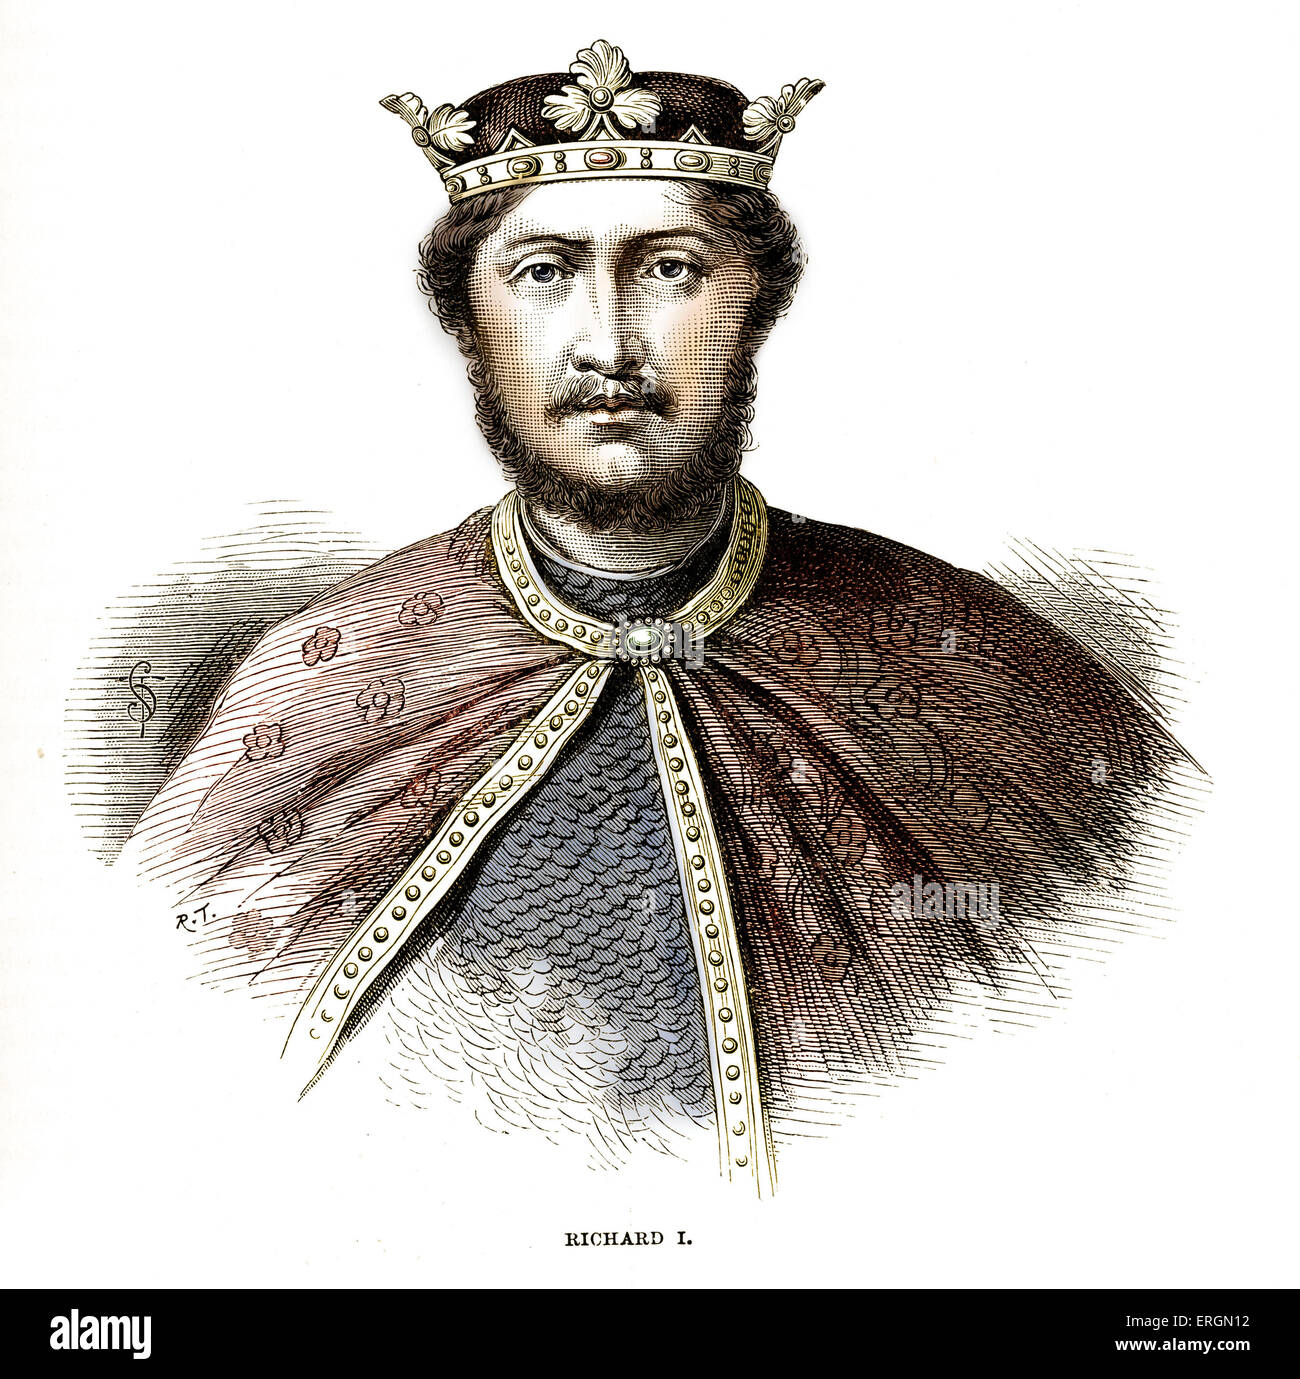 Richard i of England